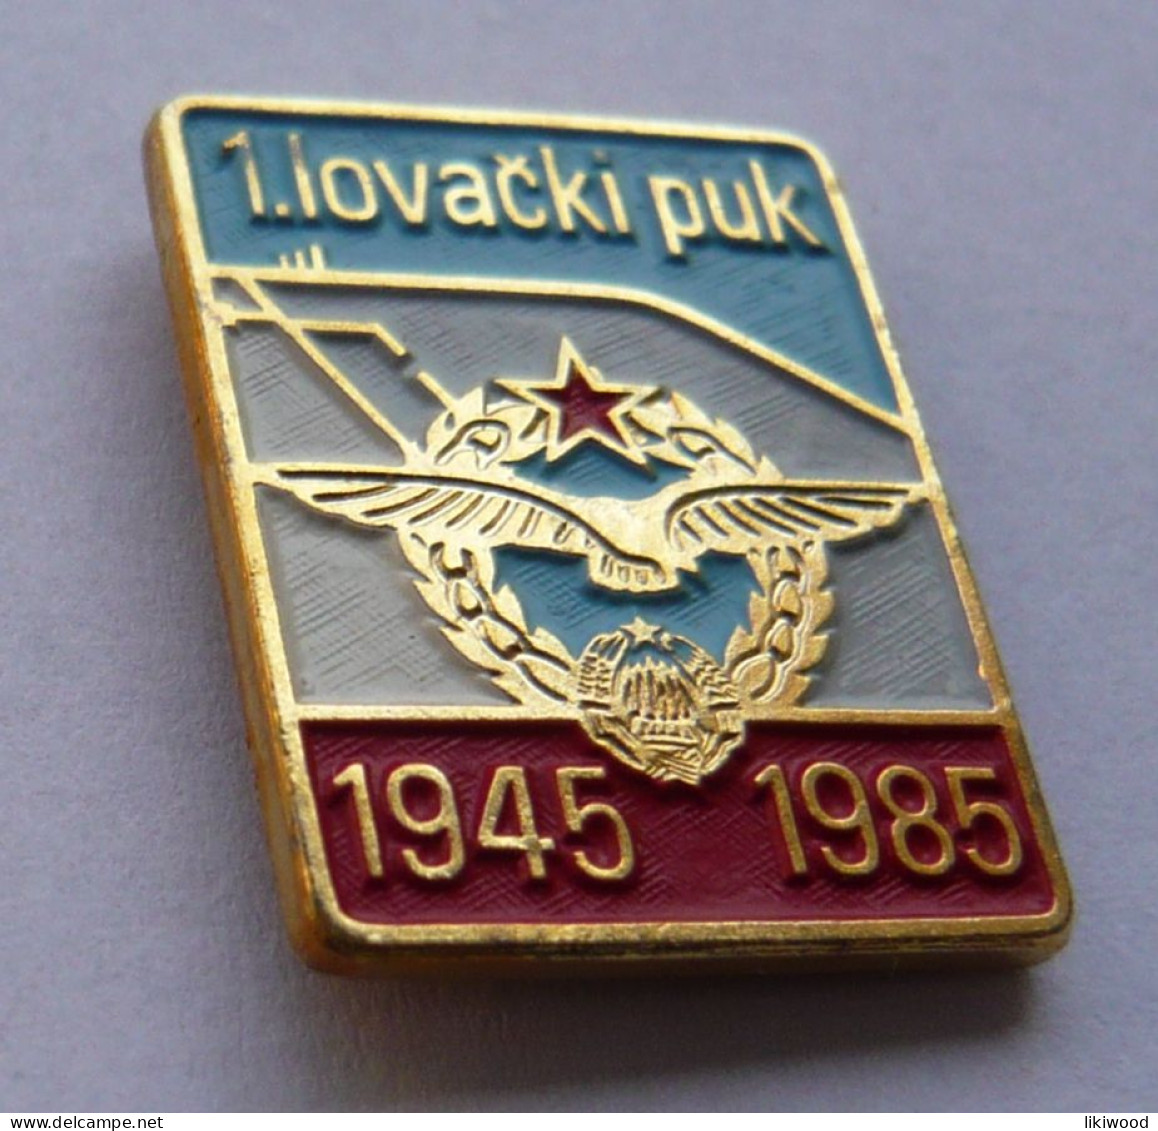 1.lovački Puk - 1st Yugoslav Fighter Regiment - 1945-1985 - 40th Anniversary - Army